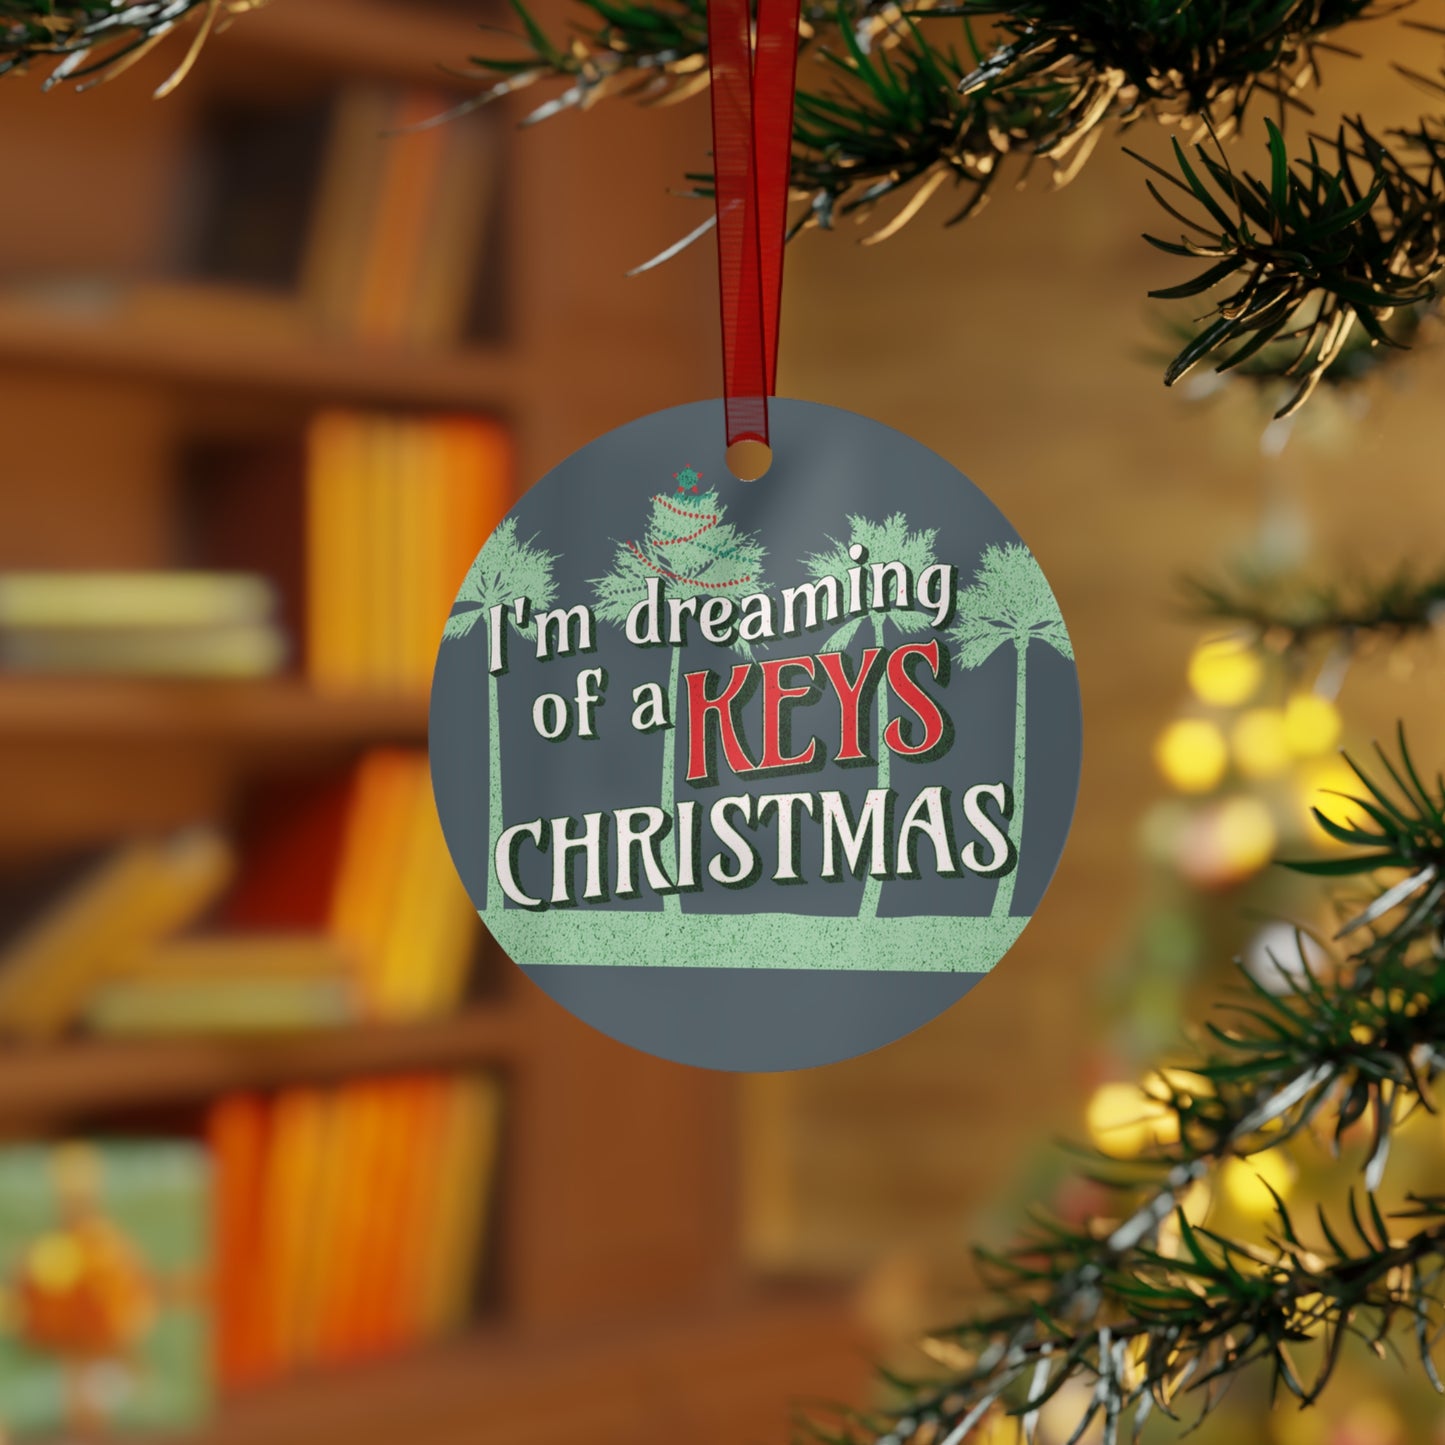 Florida Keys Ornament - Dreaming of a Keys Christmas